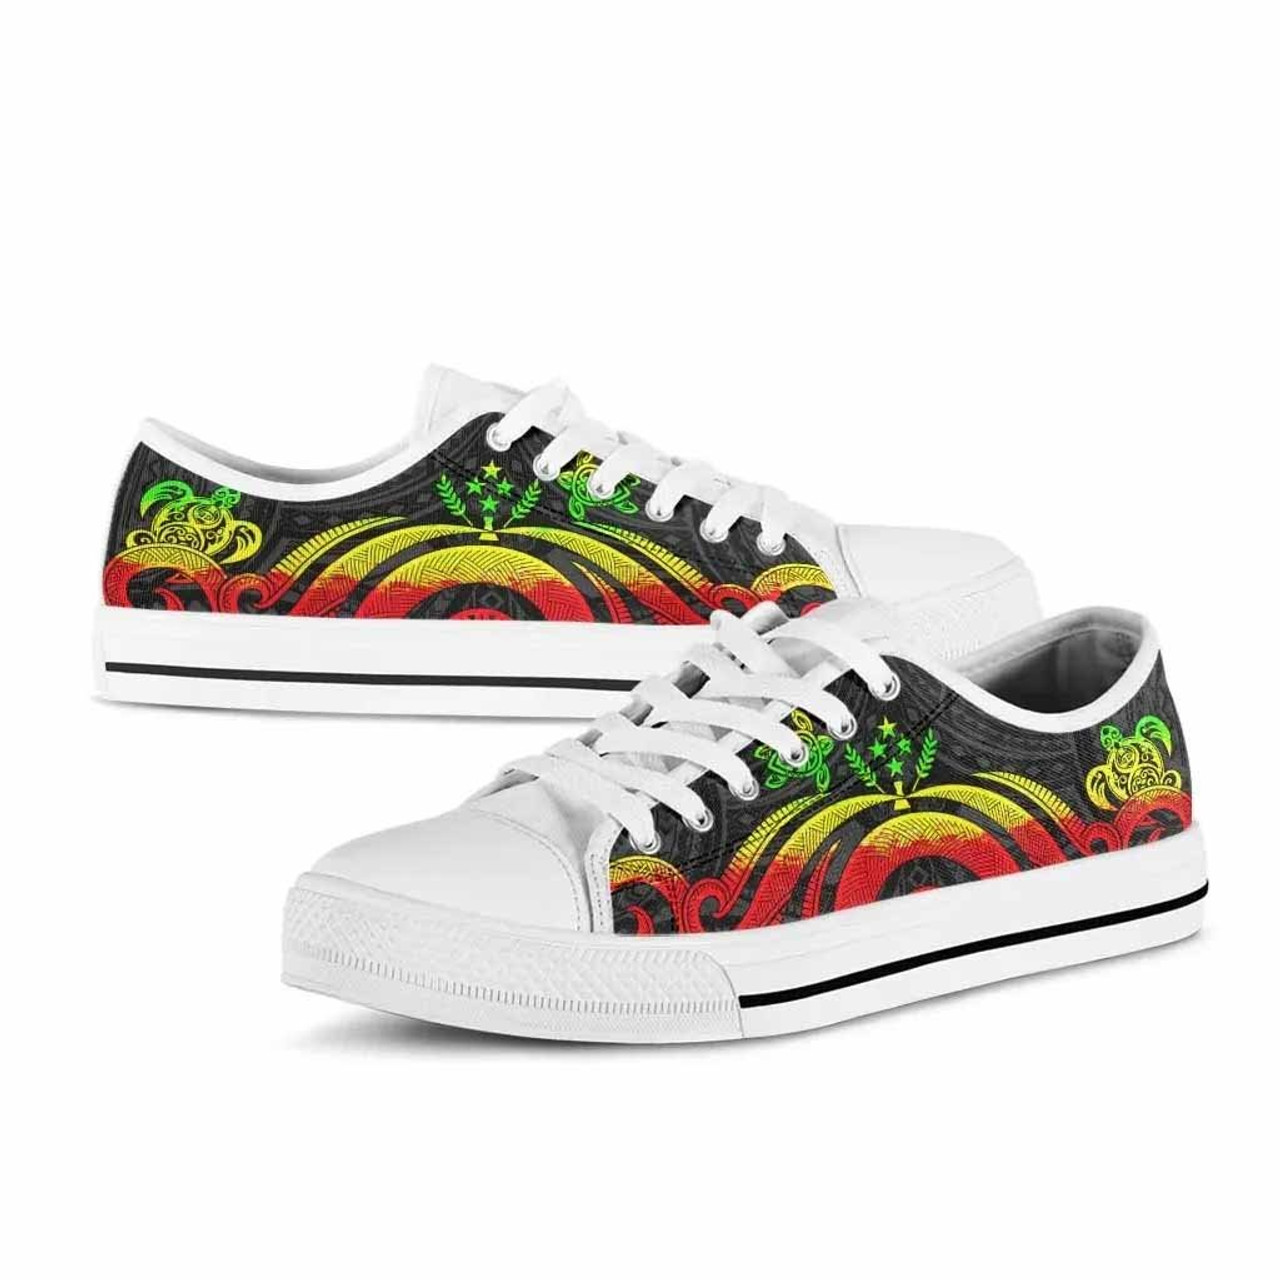 Kosrae Low Top Canvas Shoes - Reggae Tentacle Turtle 6